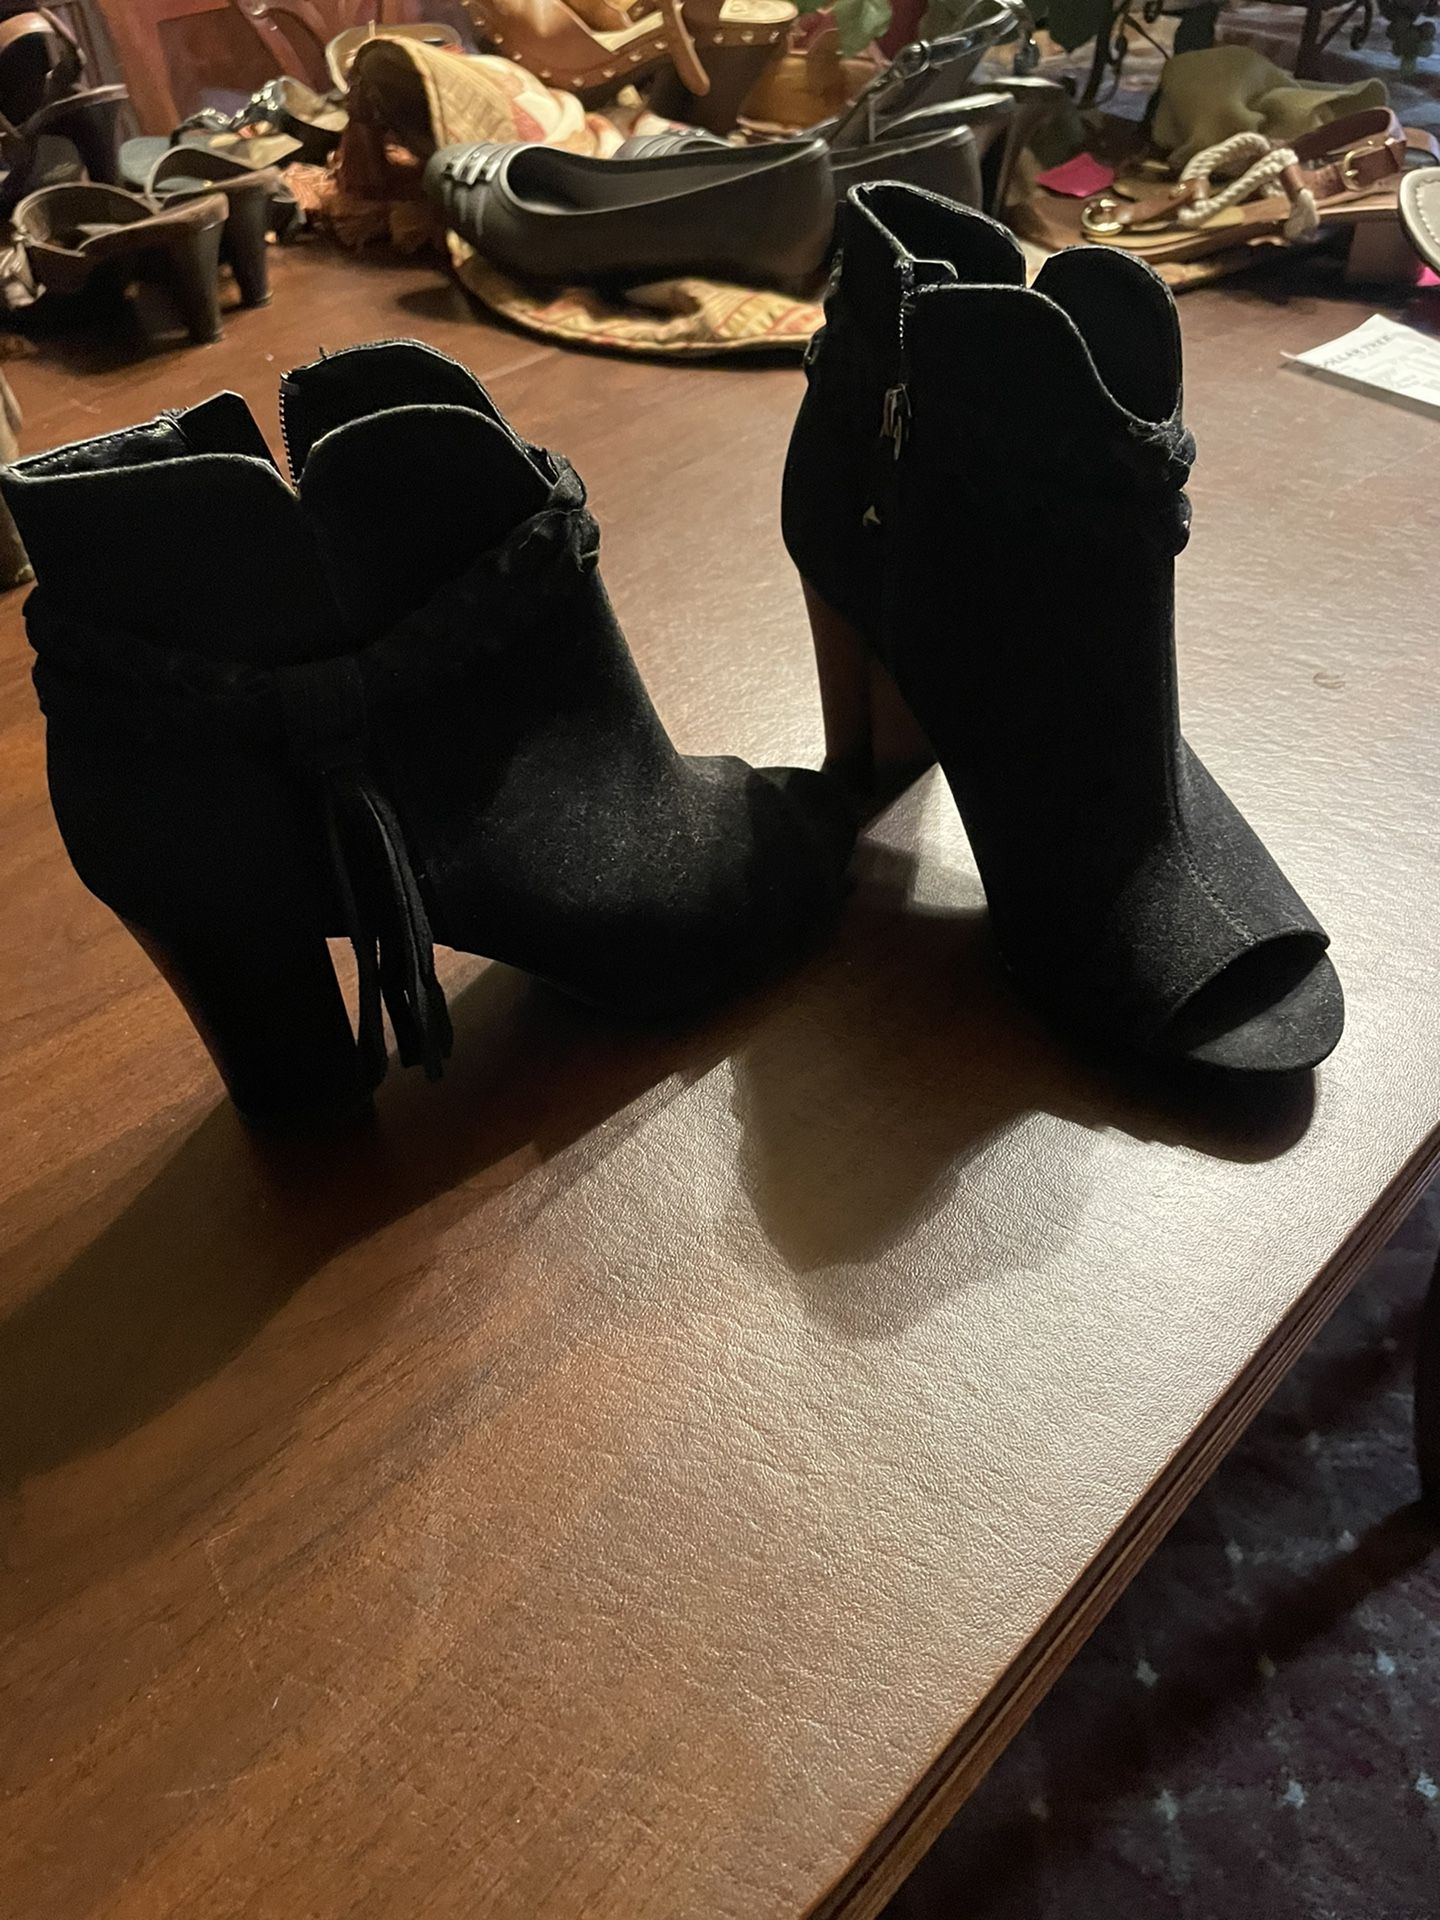 Size 6 1/2 Ladies Heels